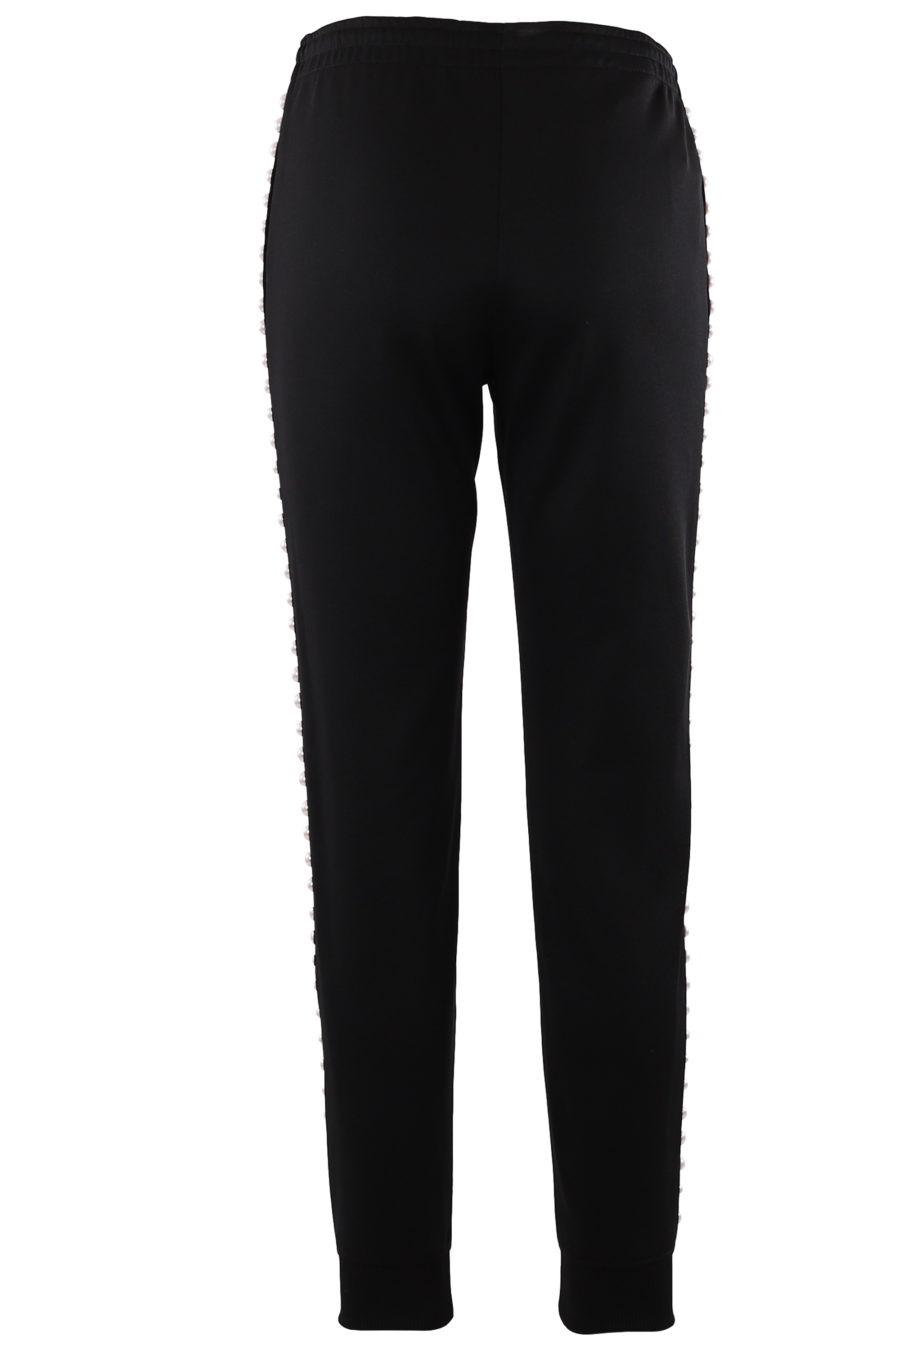 Pantalón de chándal negro con logotipo multicolor - 5f4ca15987f80011de769bbc14f98a78b826ca56 1